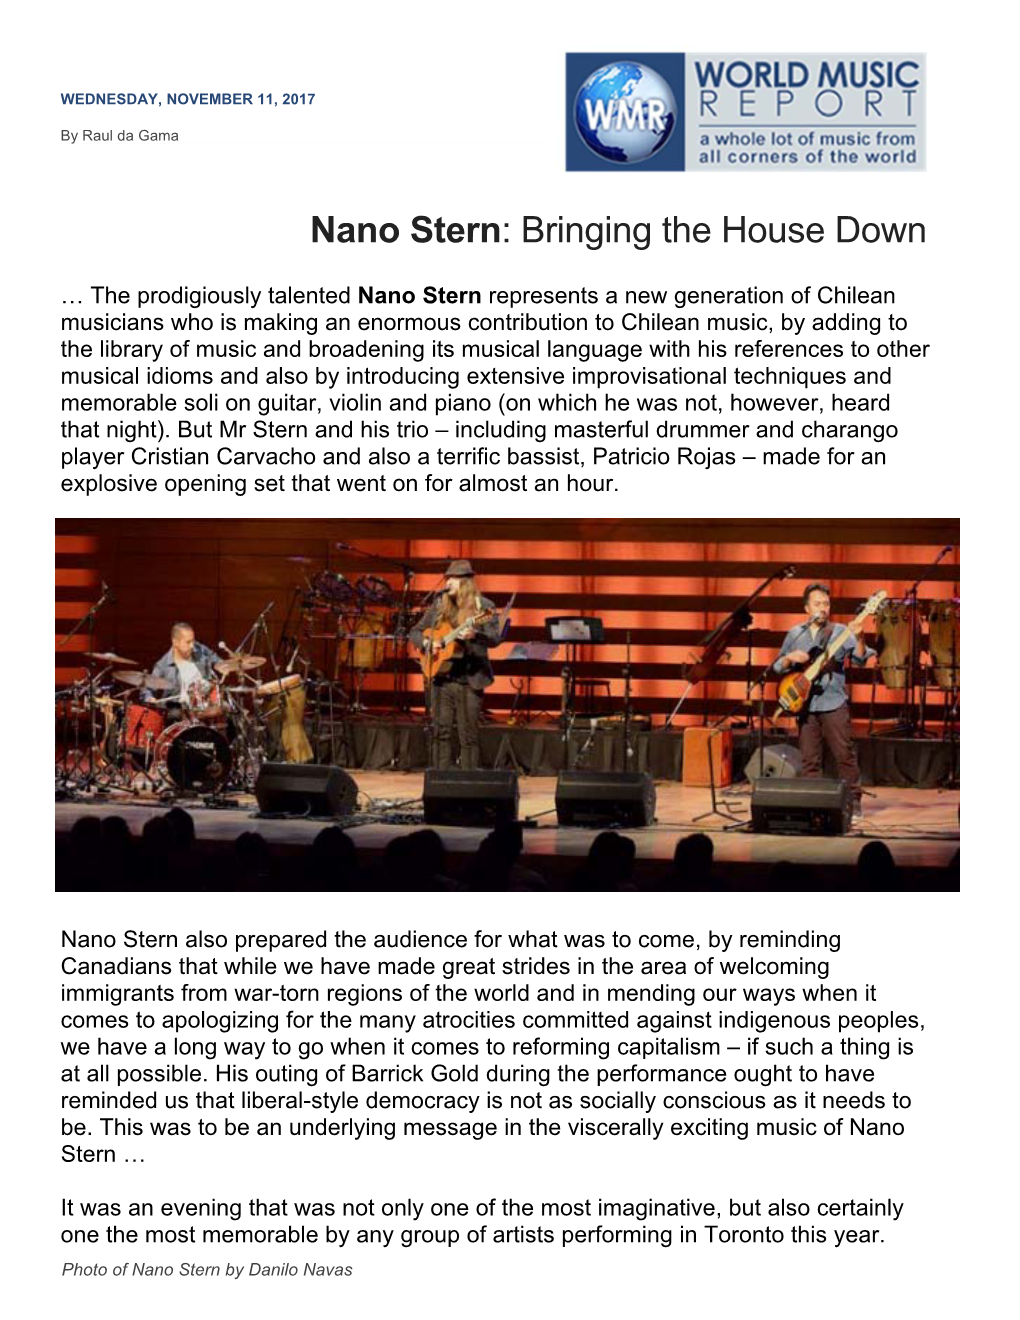 Inti-Illimani and Nano Stern: Bringing the House Down